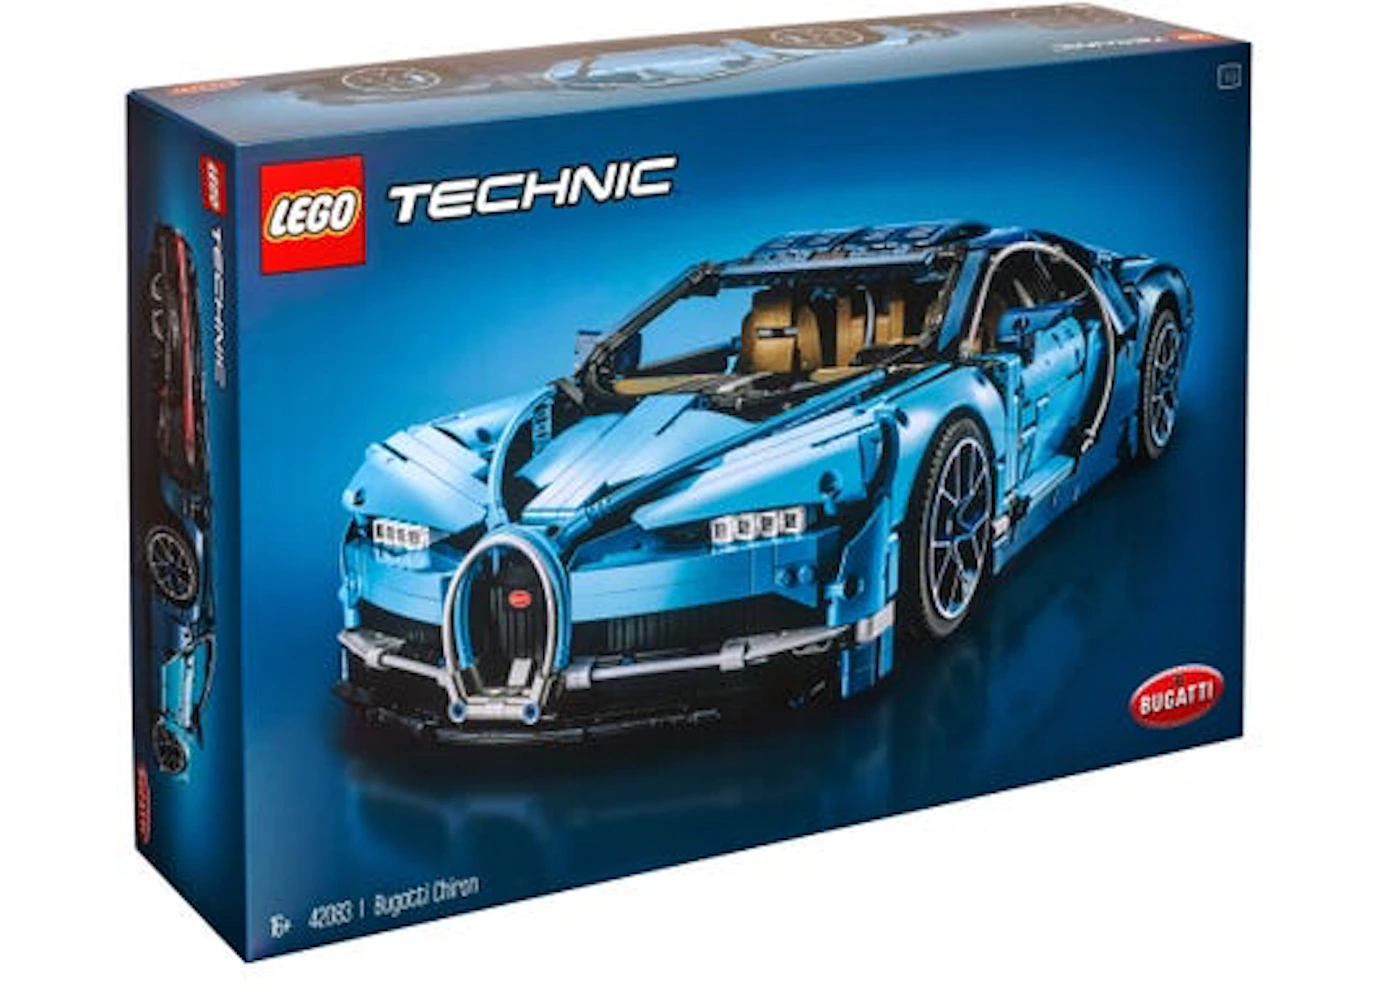 LEGO Technic Bugatti Chiron - US